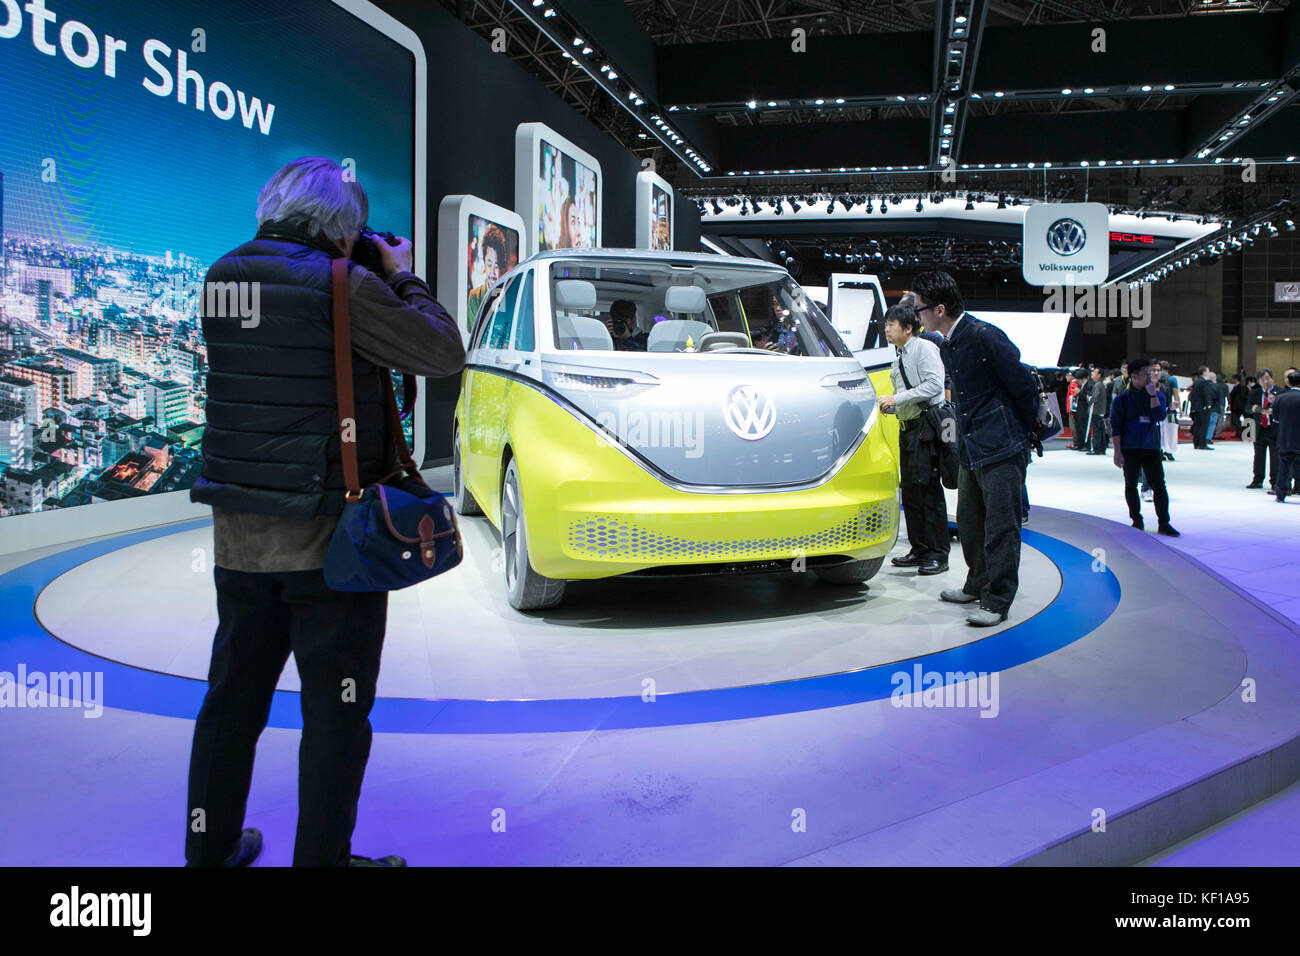 Volkswagen presents its new concept car at 45th Tokyo Motor Show. Credit: Yuichiro Tashiro /Alamy Live News Stock Photo